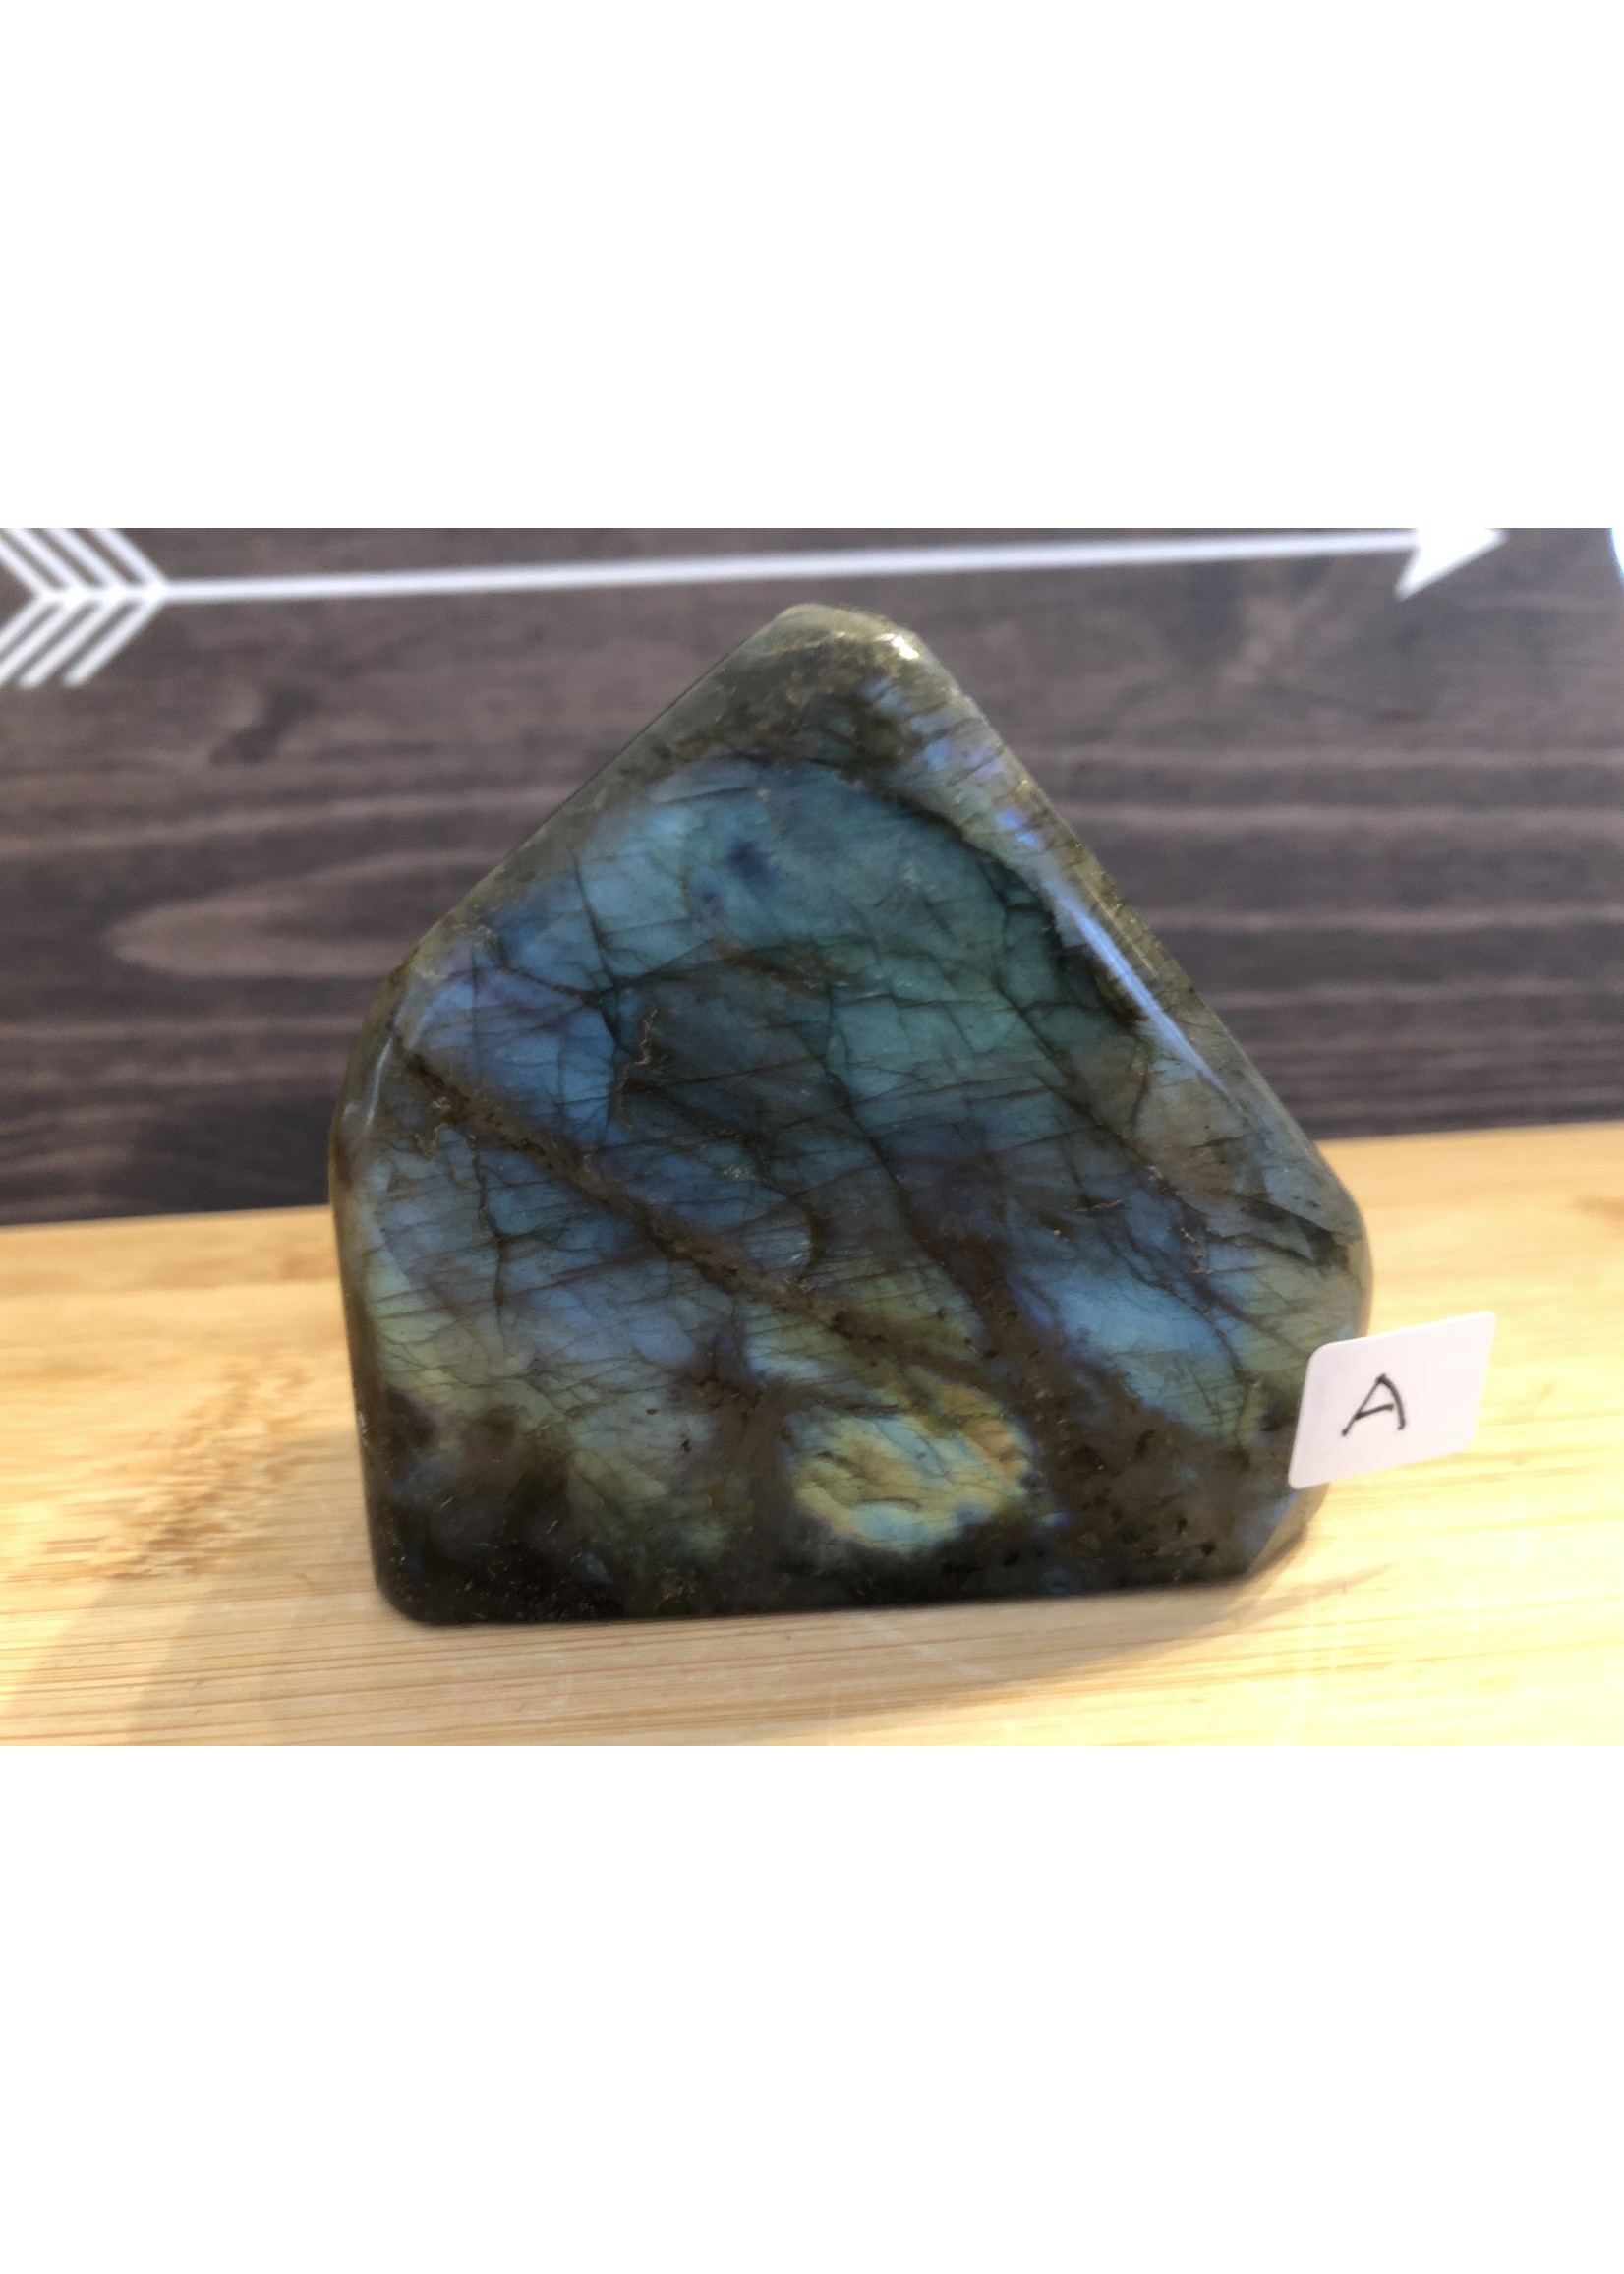 thick labradorite stone free form, develops enthusiasm and new ideas